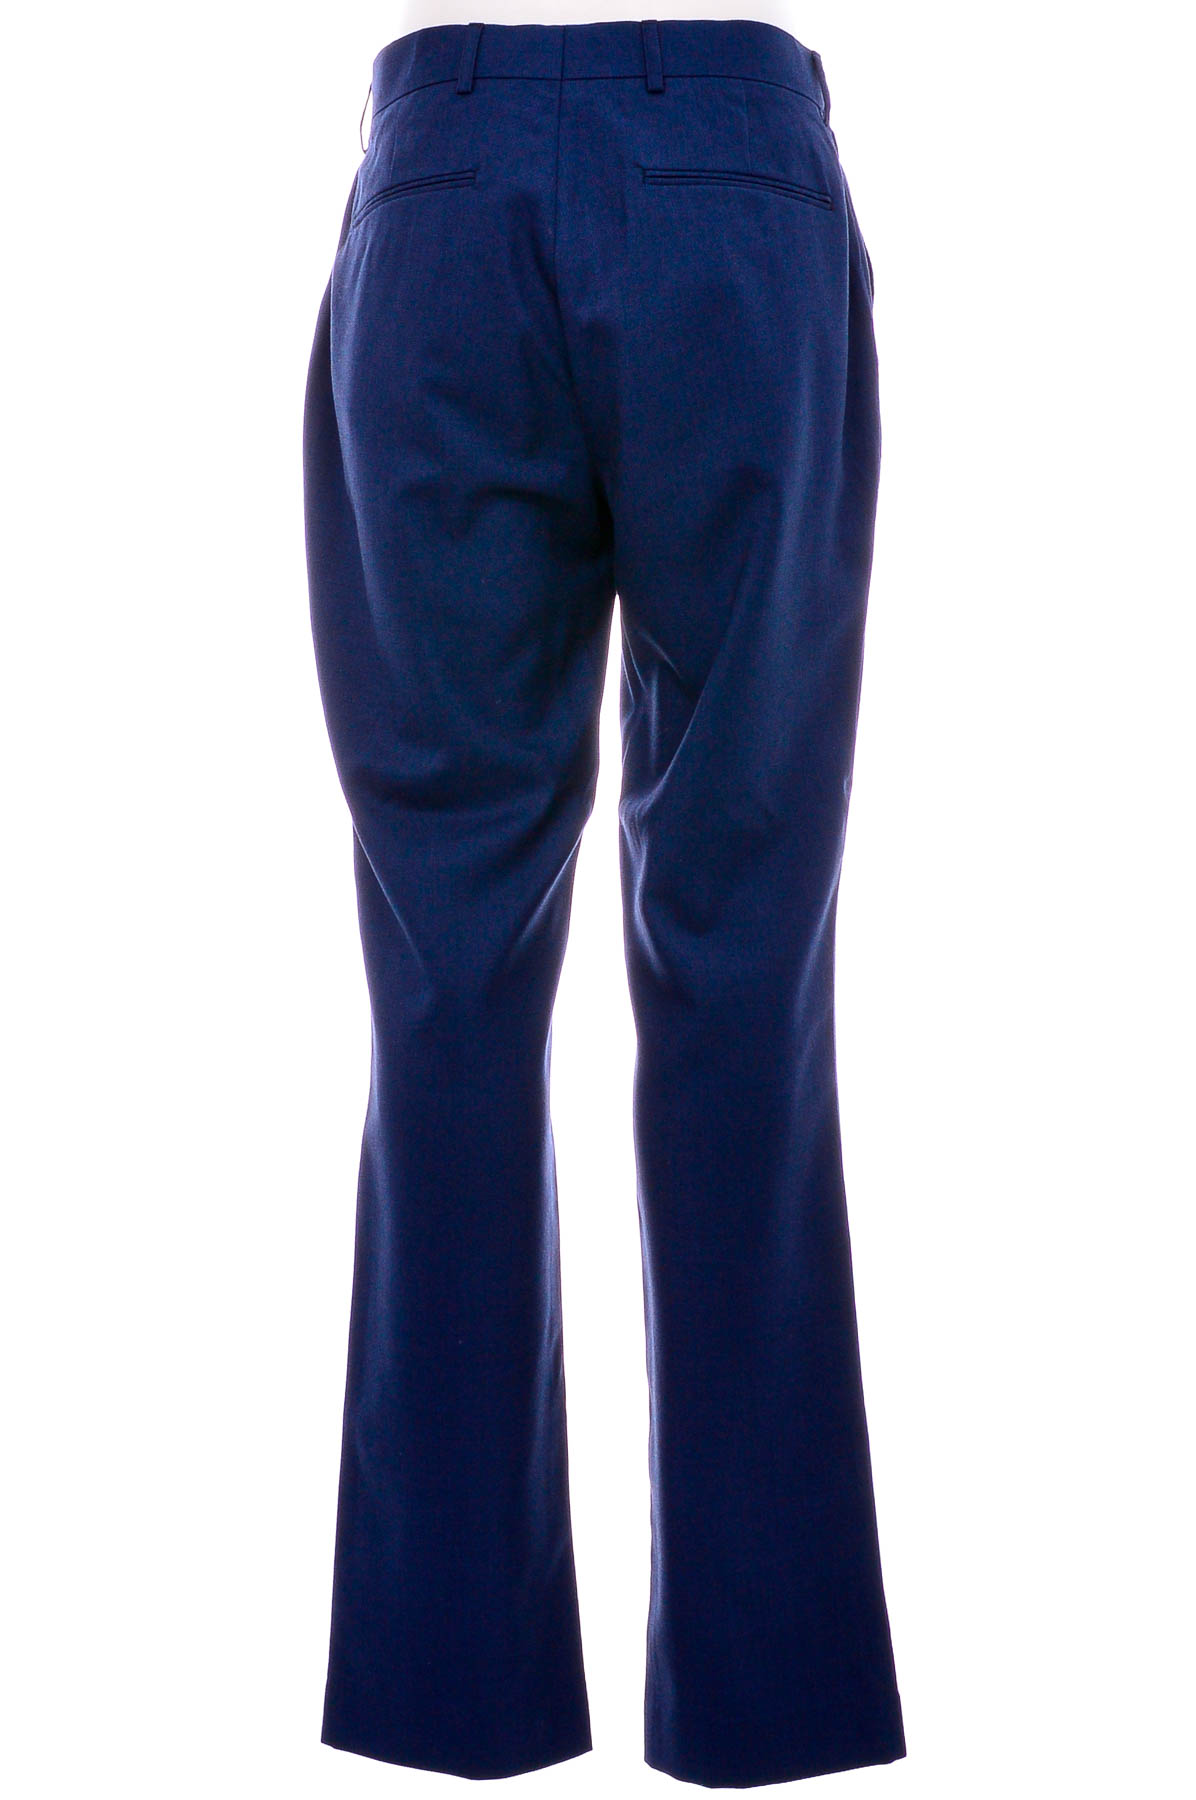 Men's trousers - TAROCASH - 1